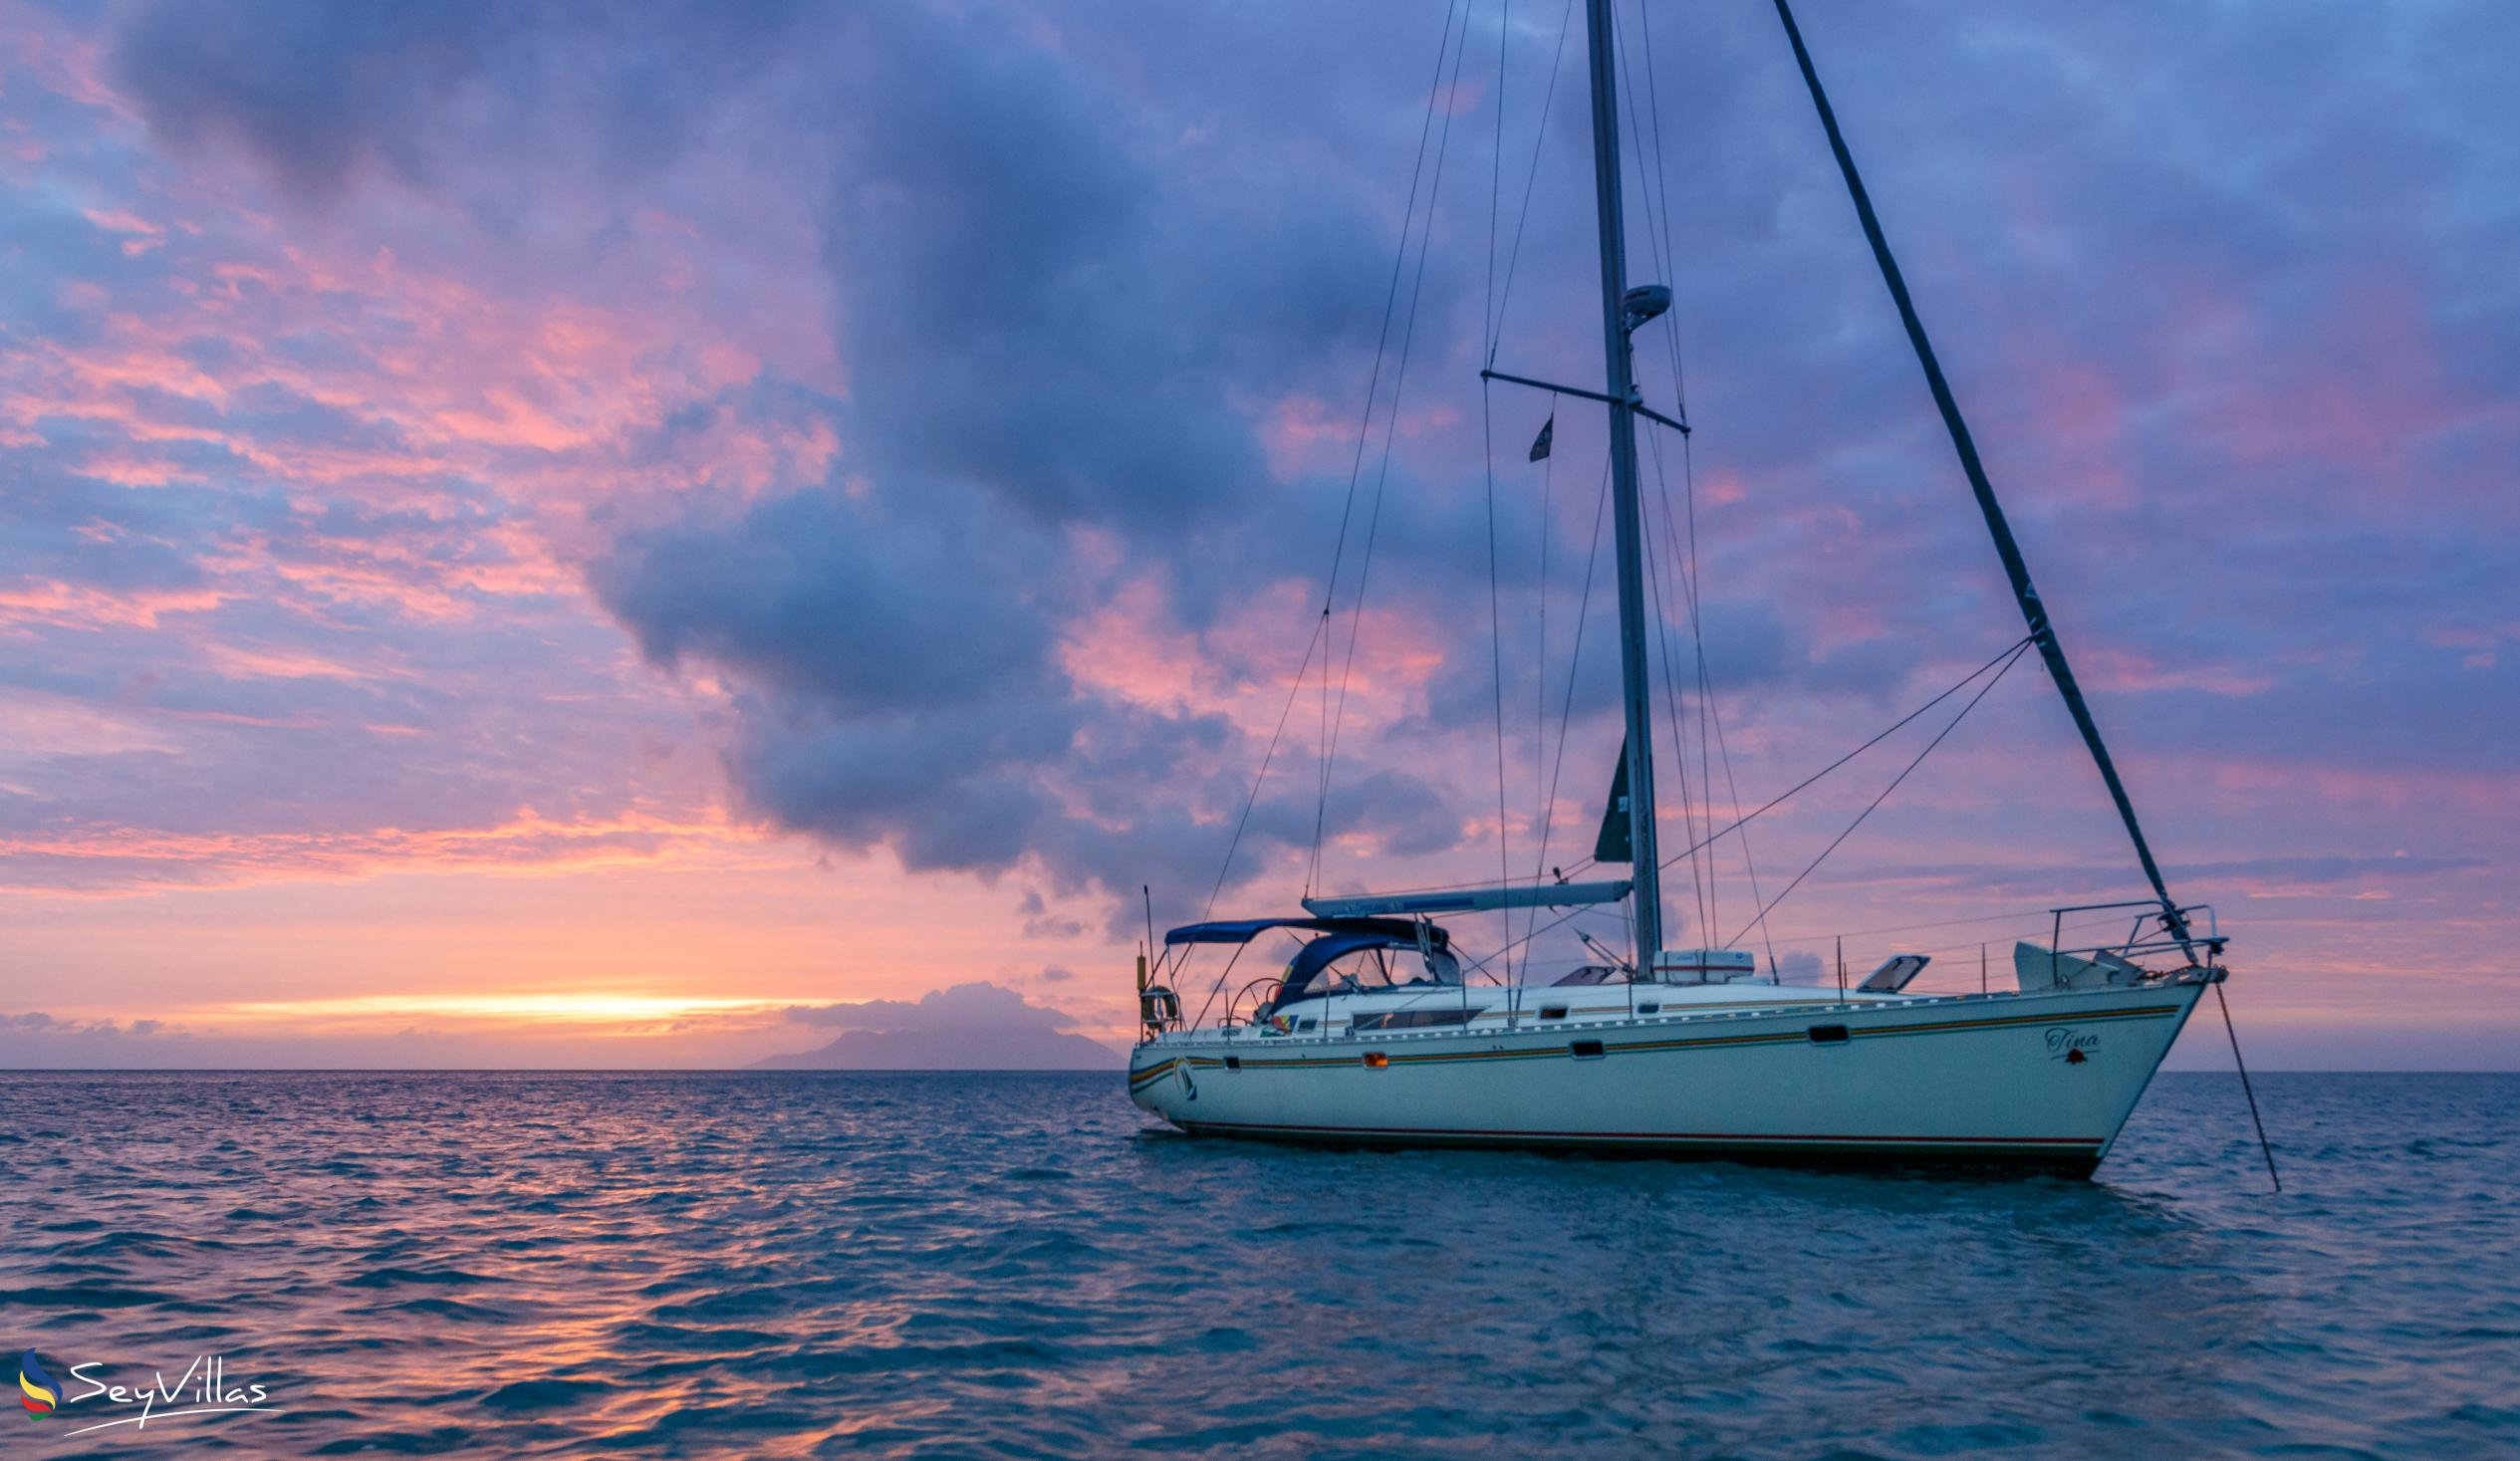 Foto 1: Seyscapes Yacht Charter - Aussenbereich - Seychellen (Seychellen)